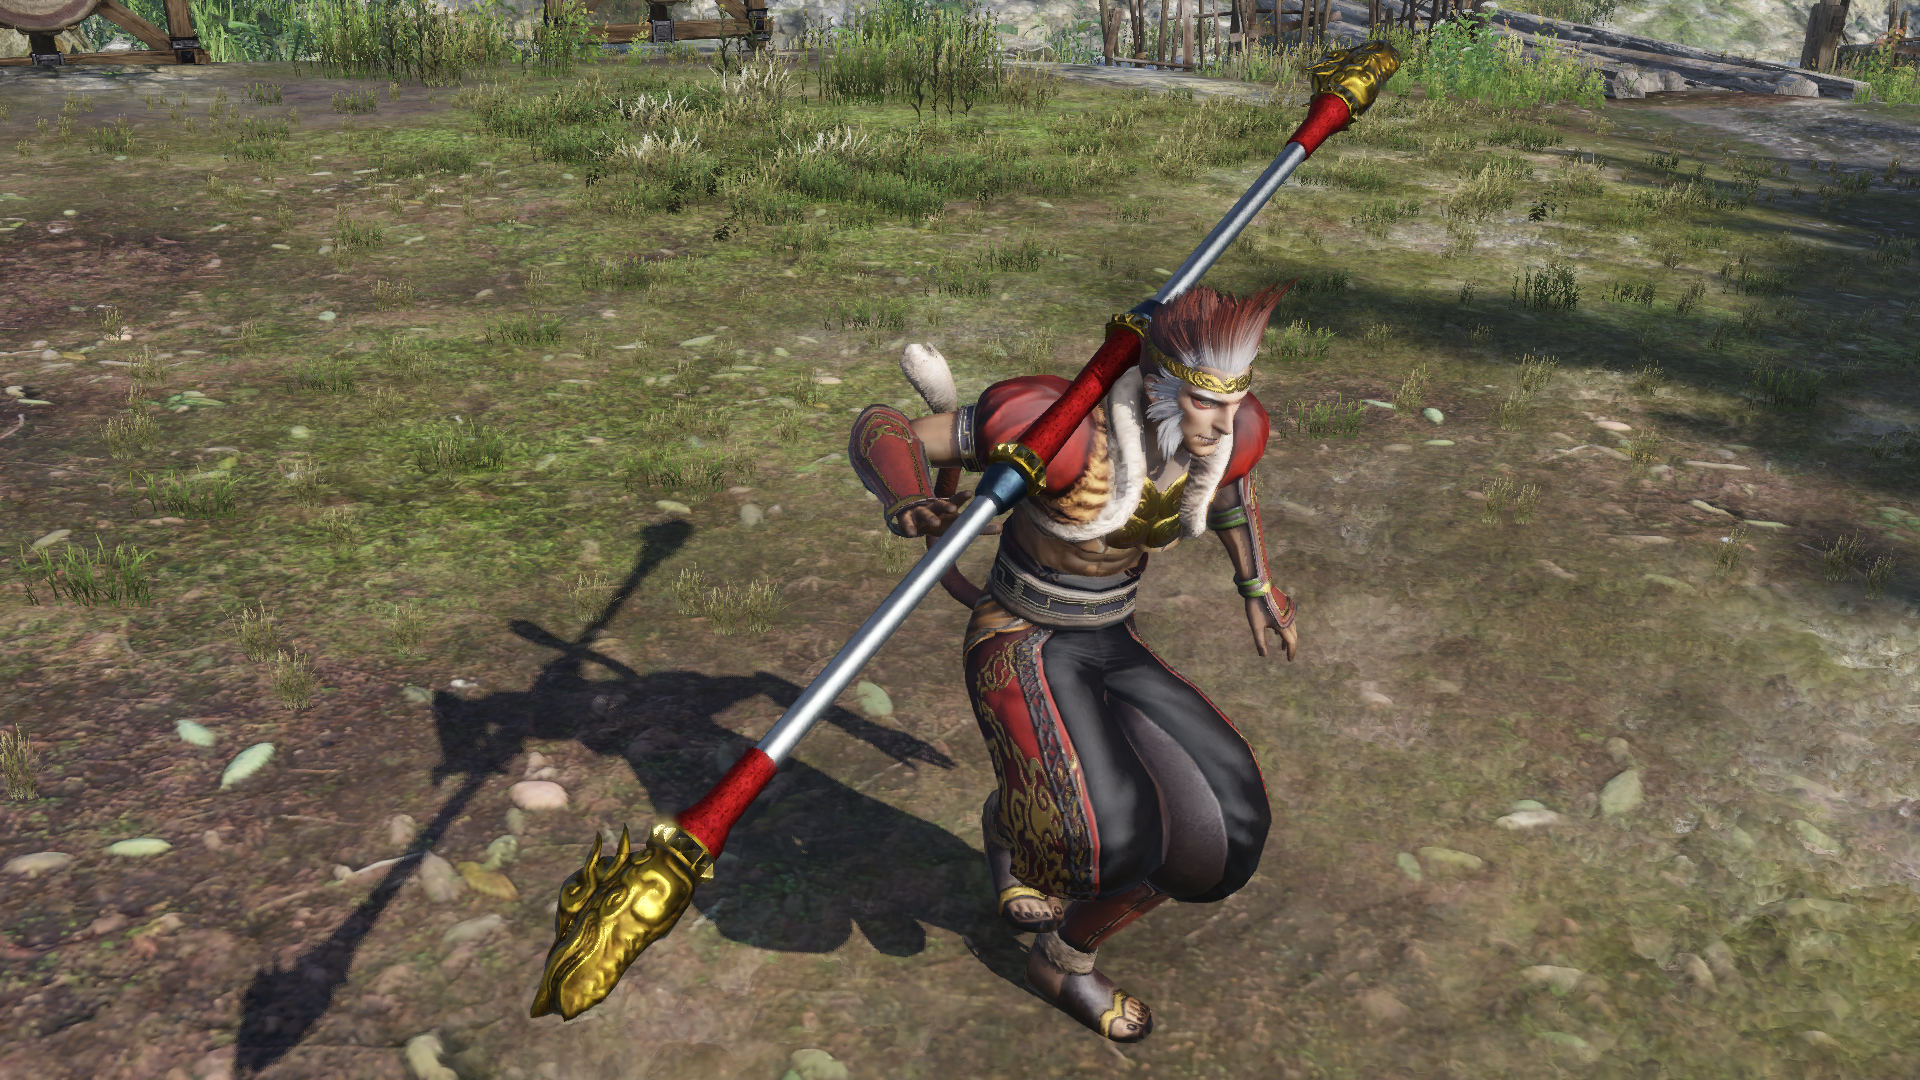 warriors orochi 3 ultimate weapon compatibility